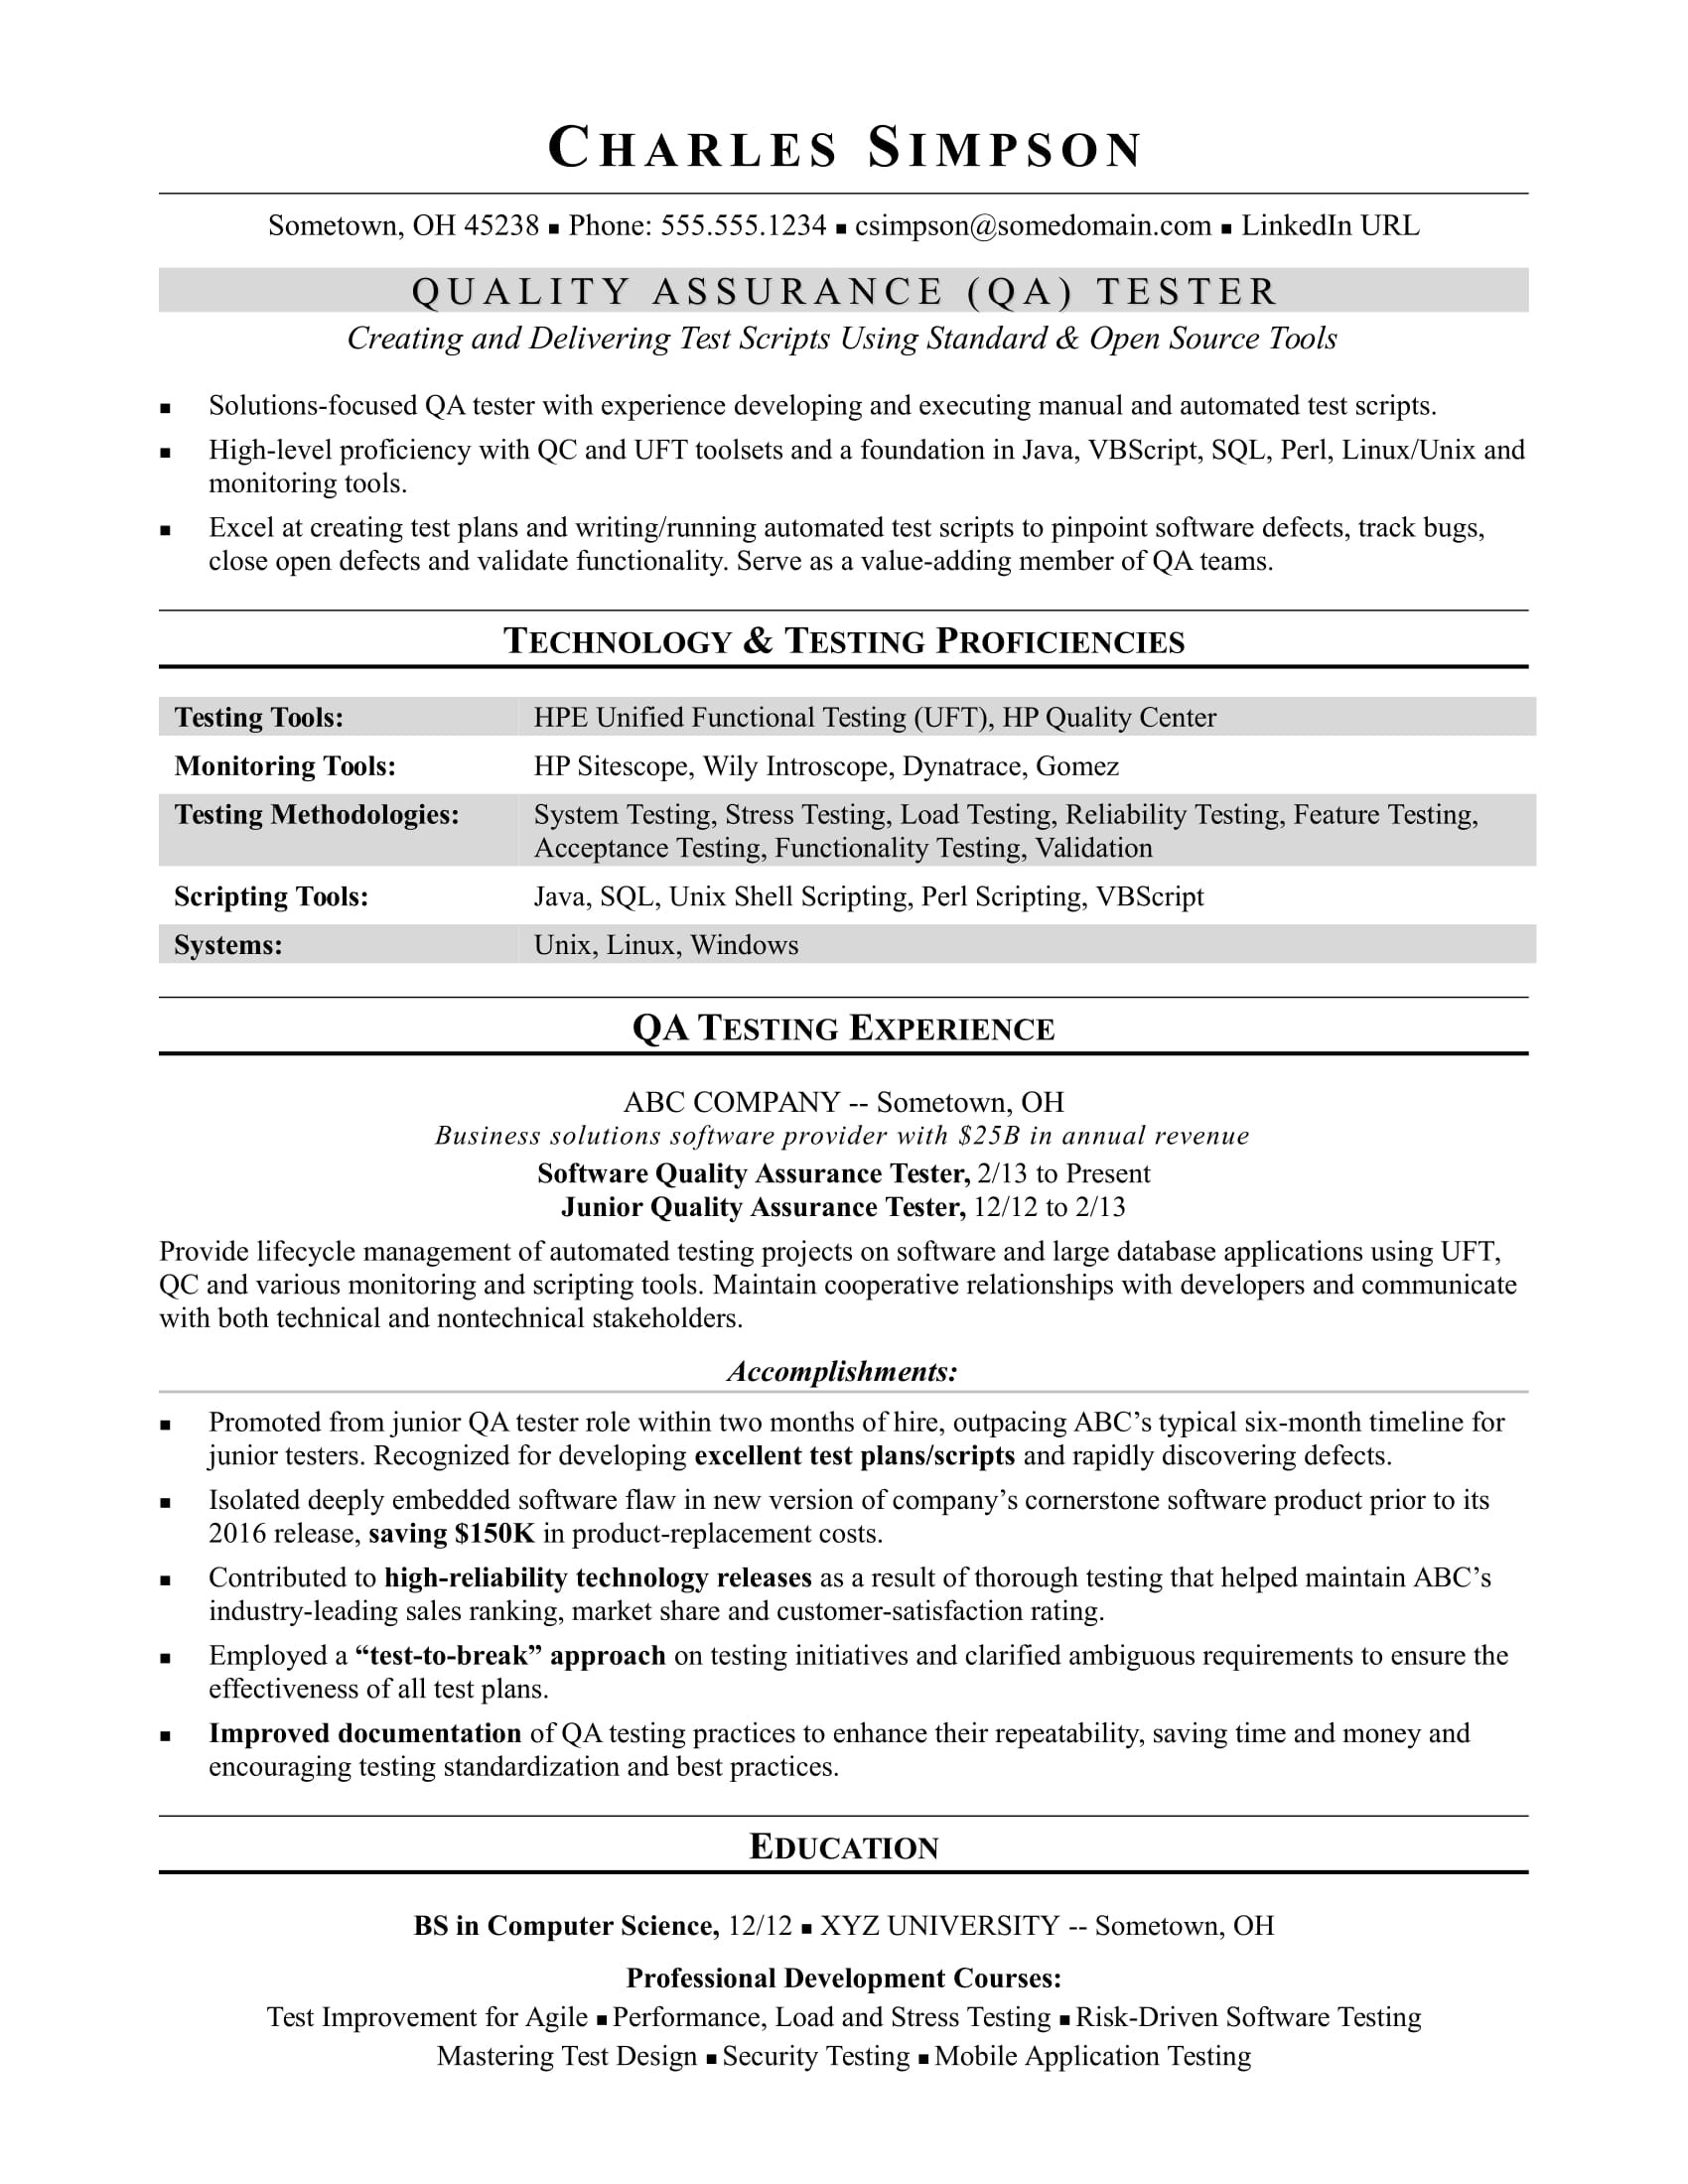 Entry Level Manual Qa Tester Resume Sample Sample Resume for A Midlevel Qa software Tester Monster.com